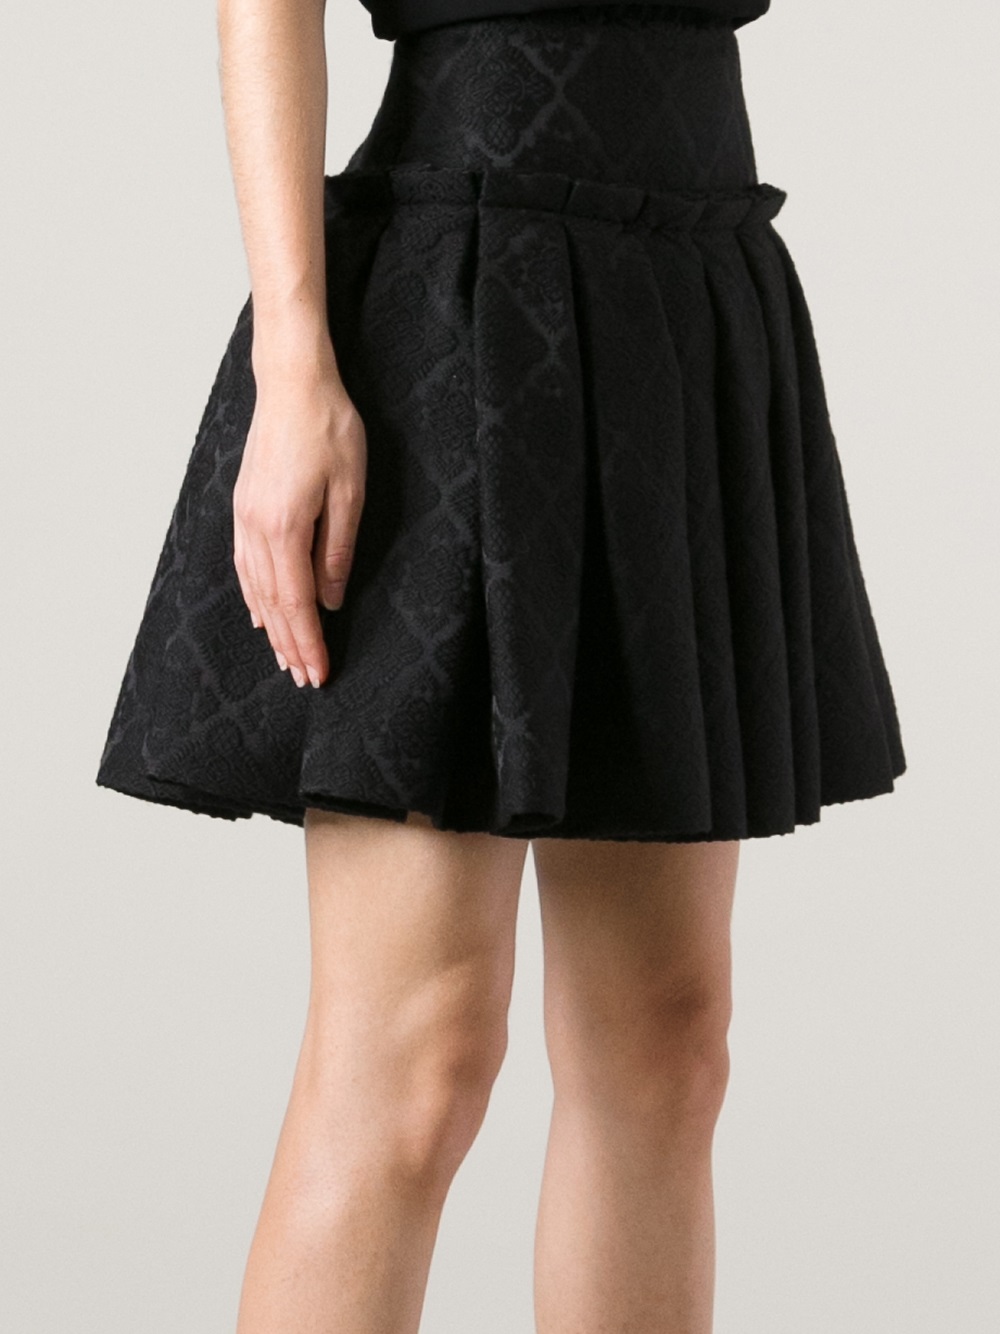 Lyst - Alexander mcqueen Pleated Skirt in Black